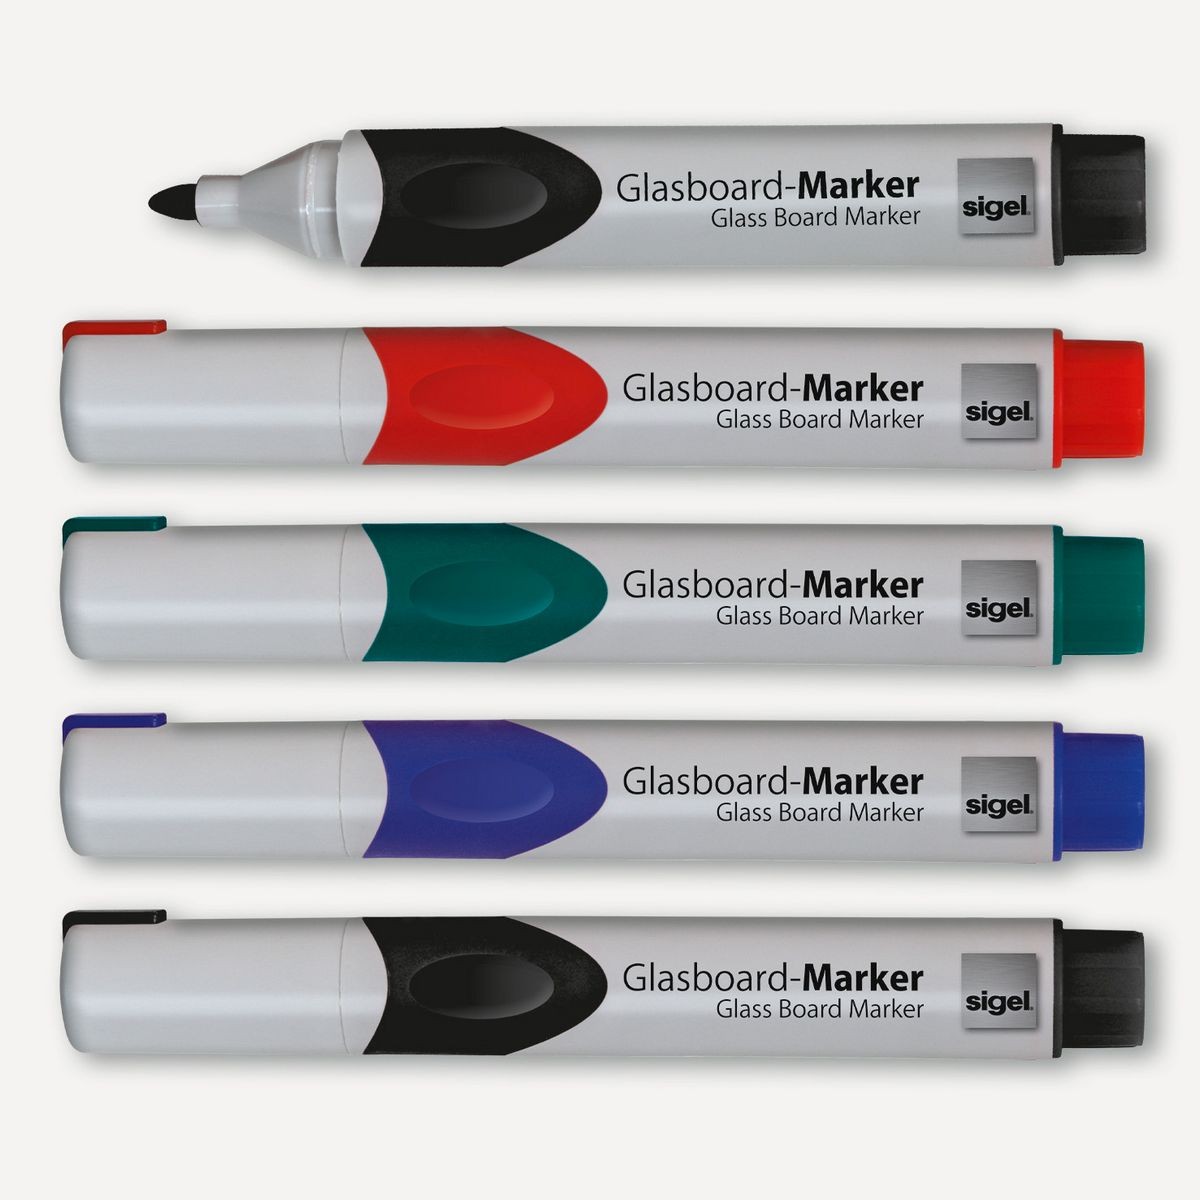 GL711 - Sigel - Marcatore per lavagne di vetro, punta tonda 2-3 mm - Multicolore